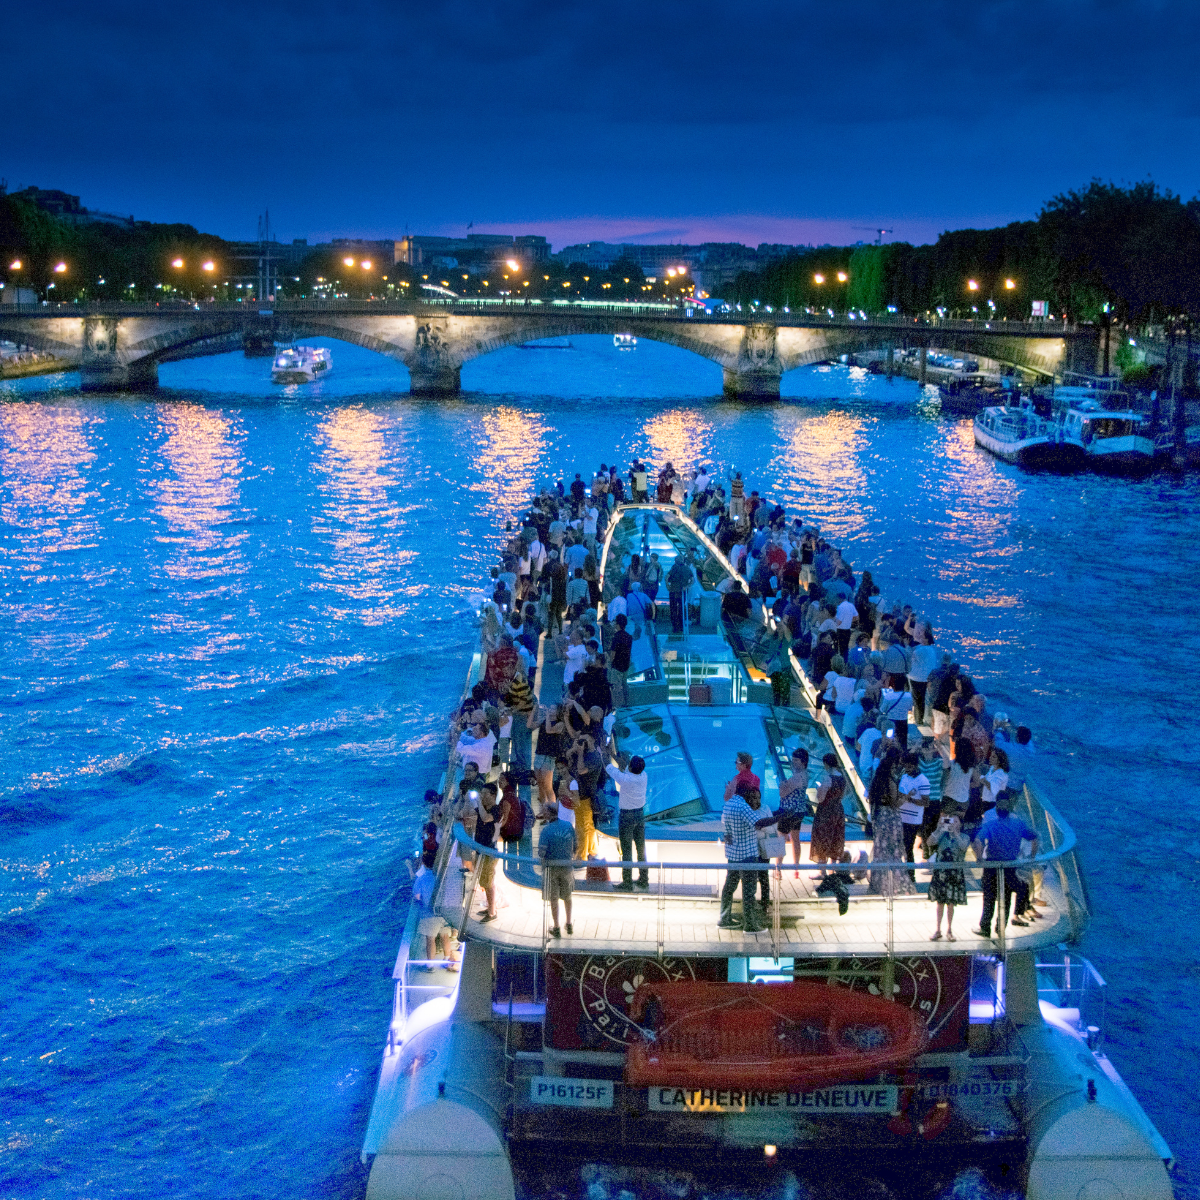 River cruise at night in Paris